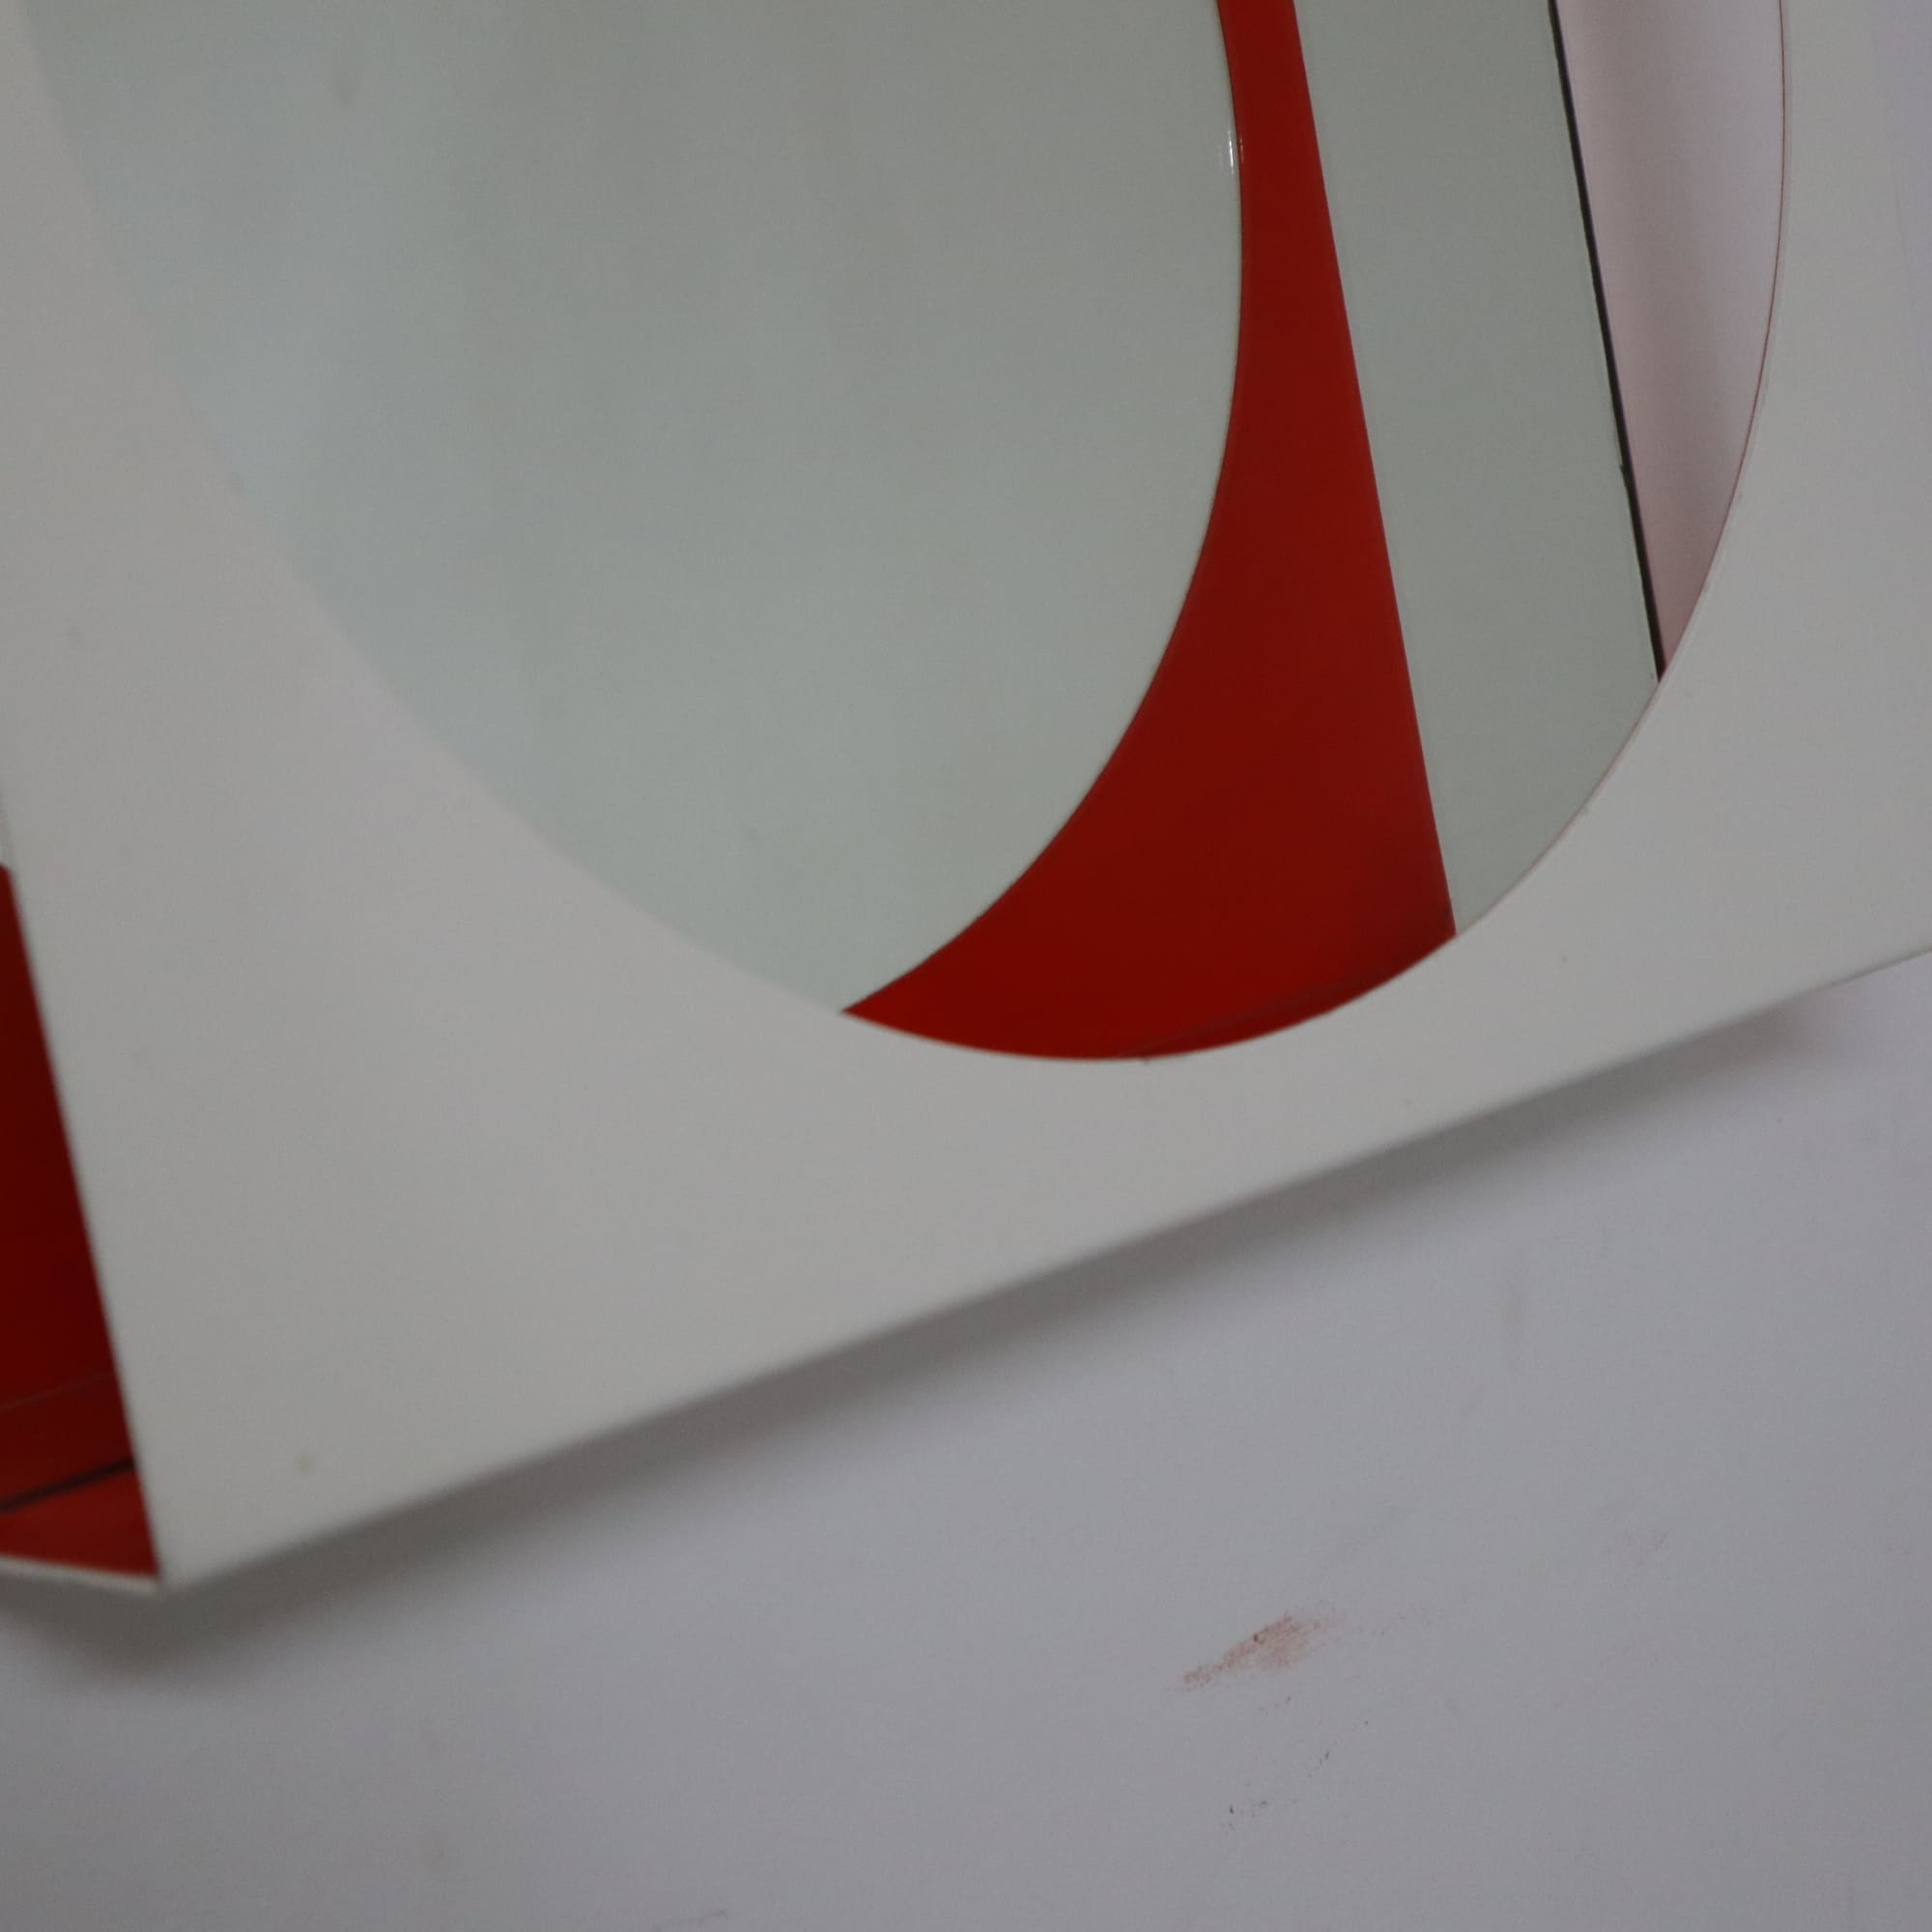 visionidepoca-visioni-depoca-specchio-geometrico-70s-metallo-rosso-arredamento-modernariato-vintage-5